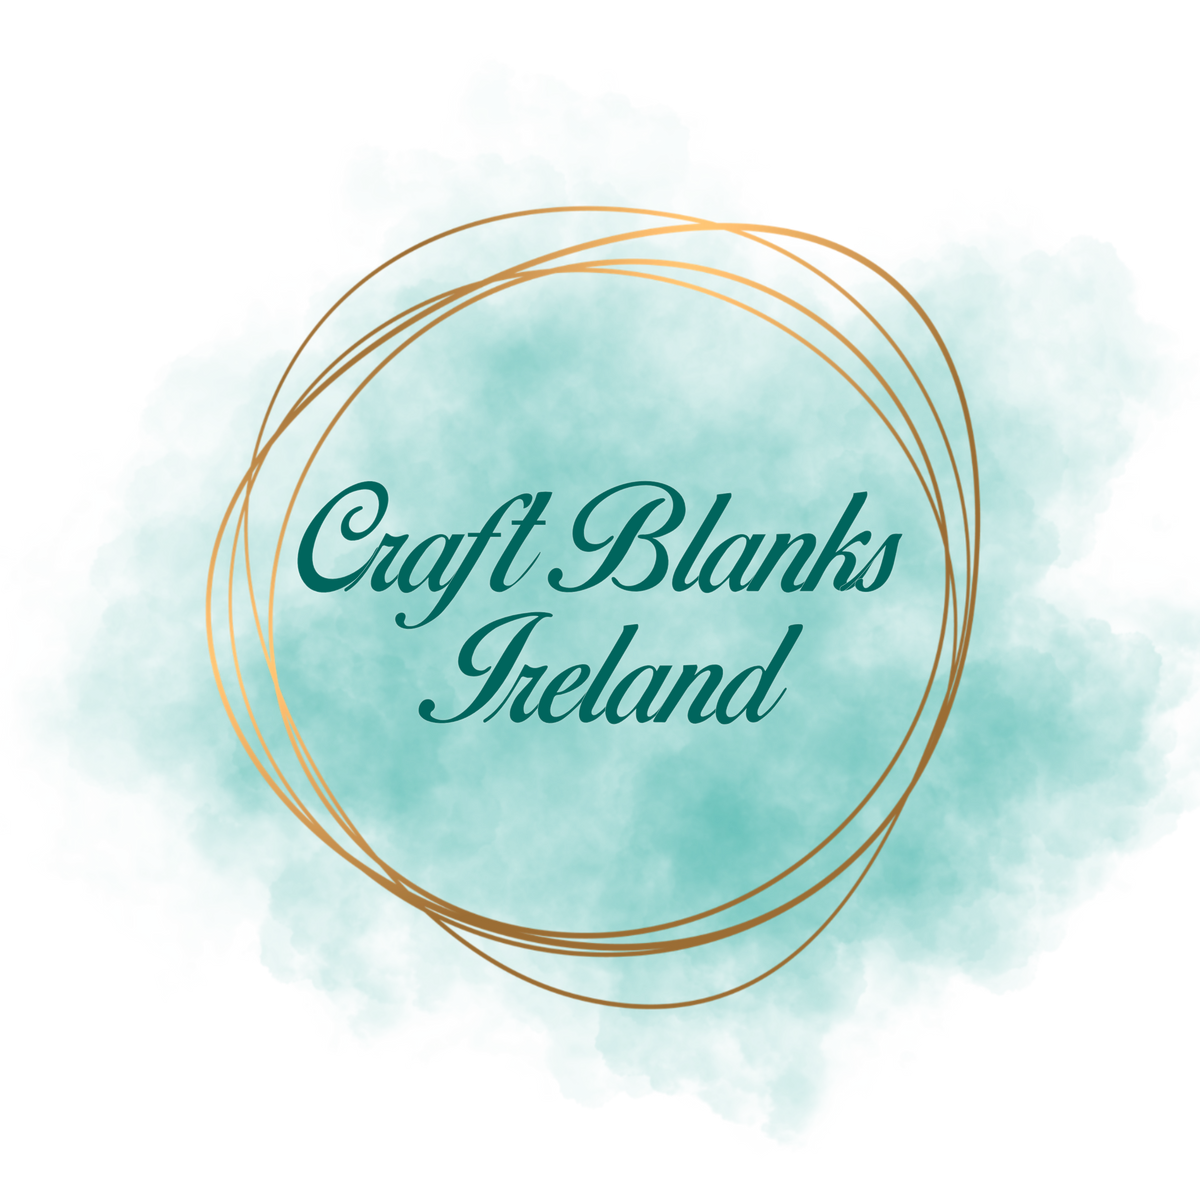 Craft Blanks Ireland